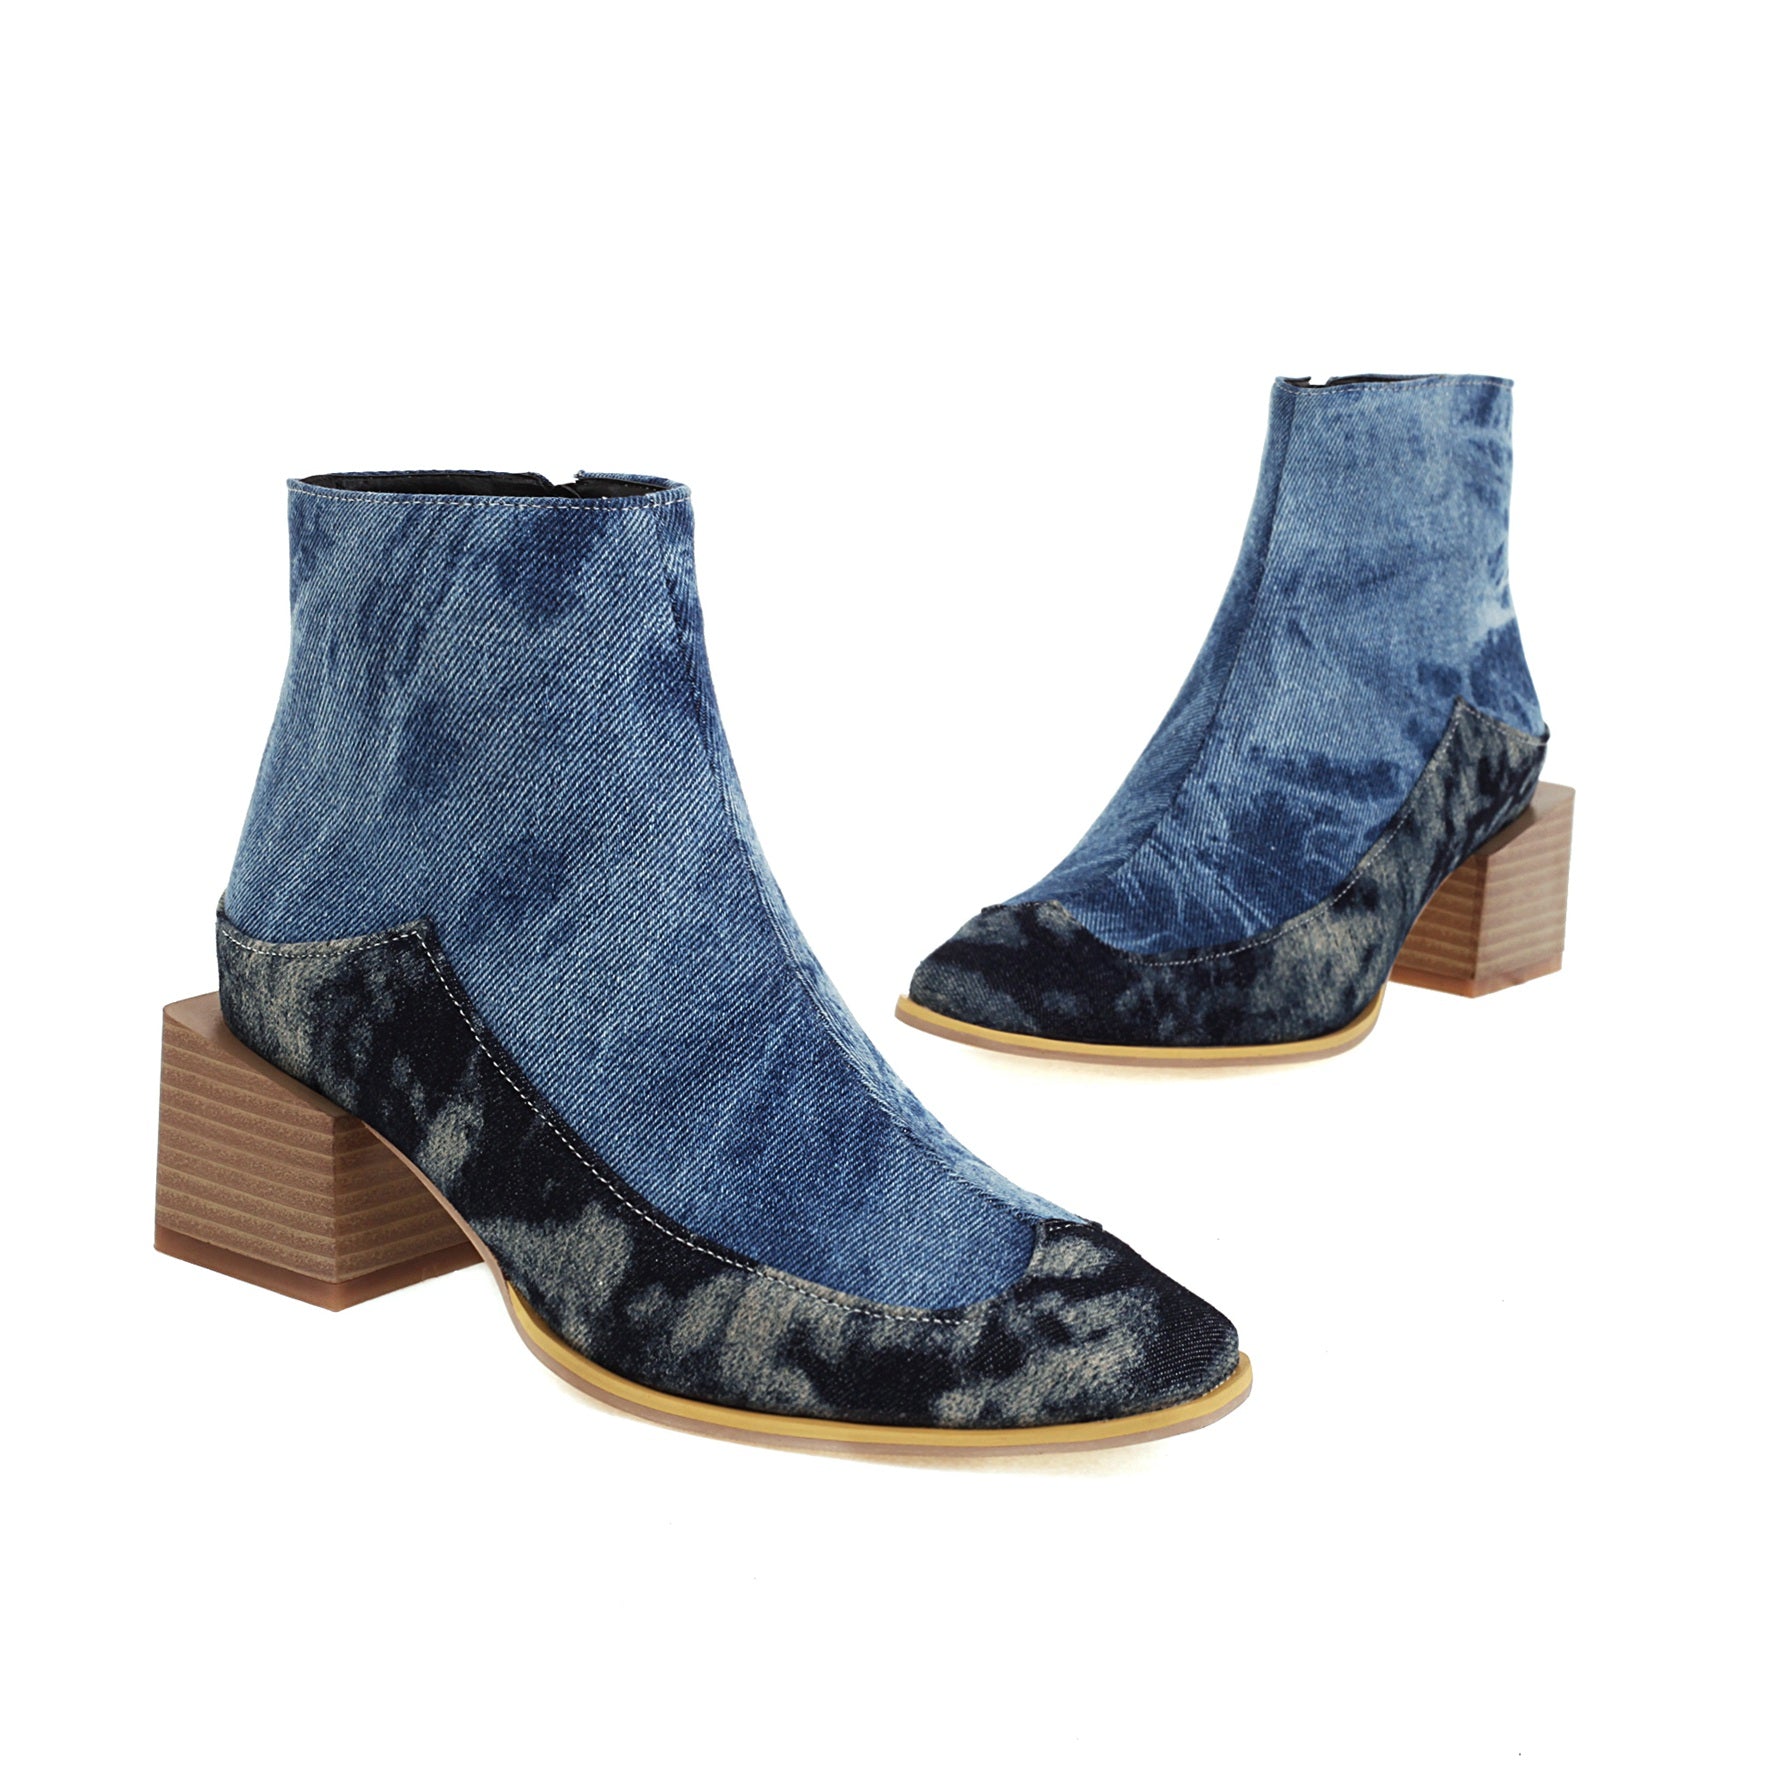 Bigsizeheels Stone pattern profiled heel ankle boots - Blue freeshipping - bigsizeheel®-size5-size15 -All Plus Sizes Available!